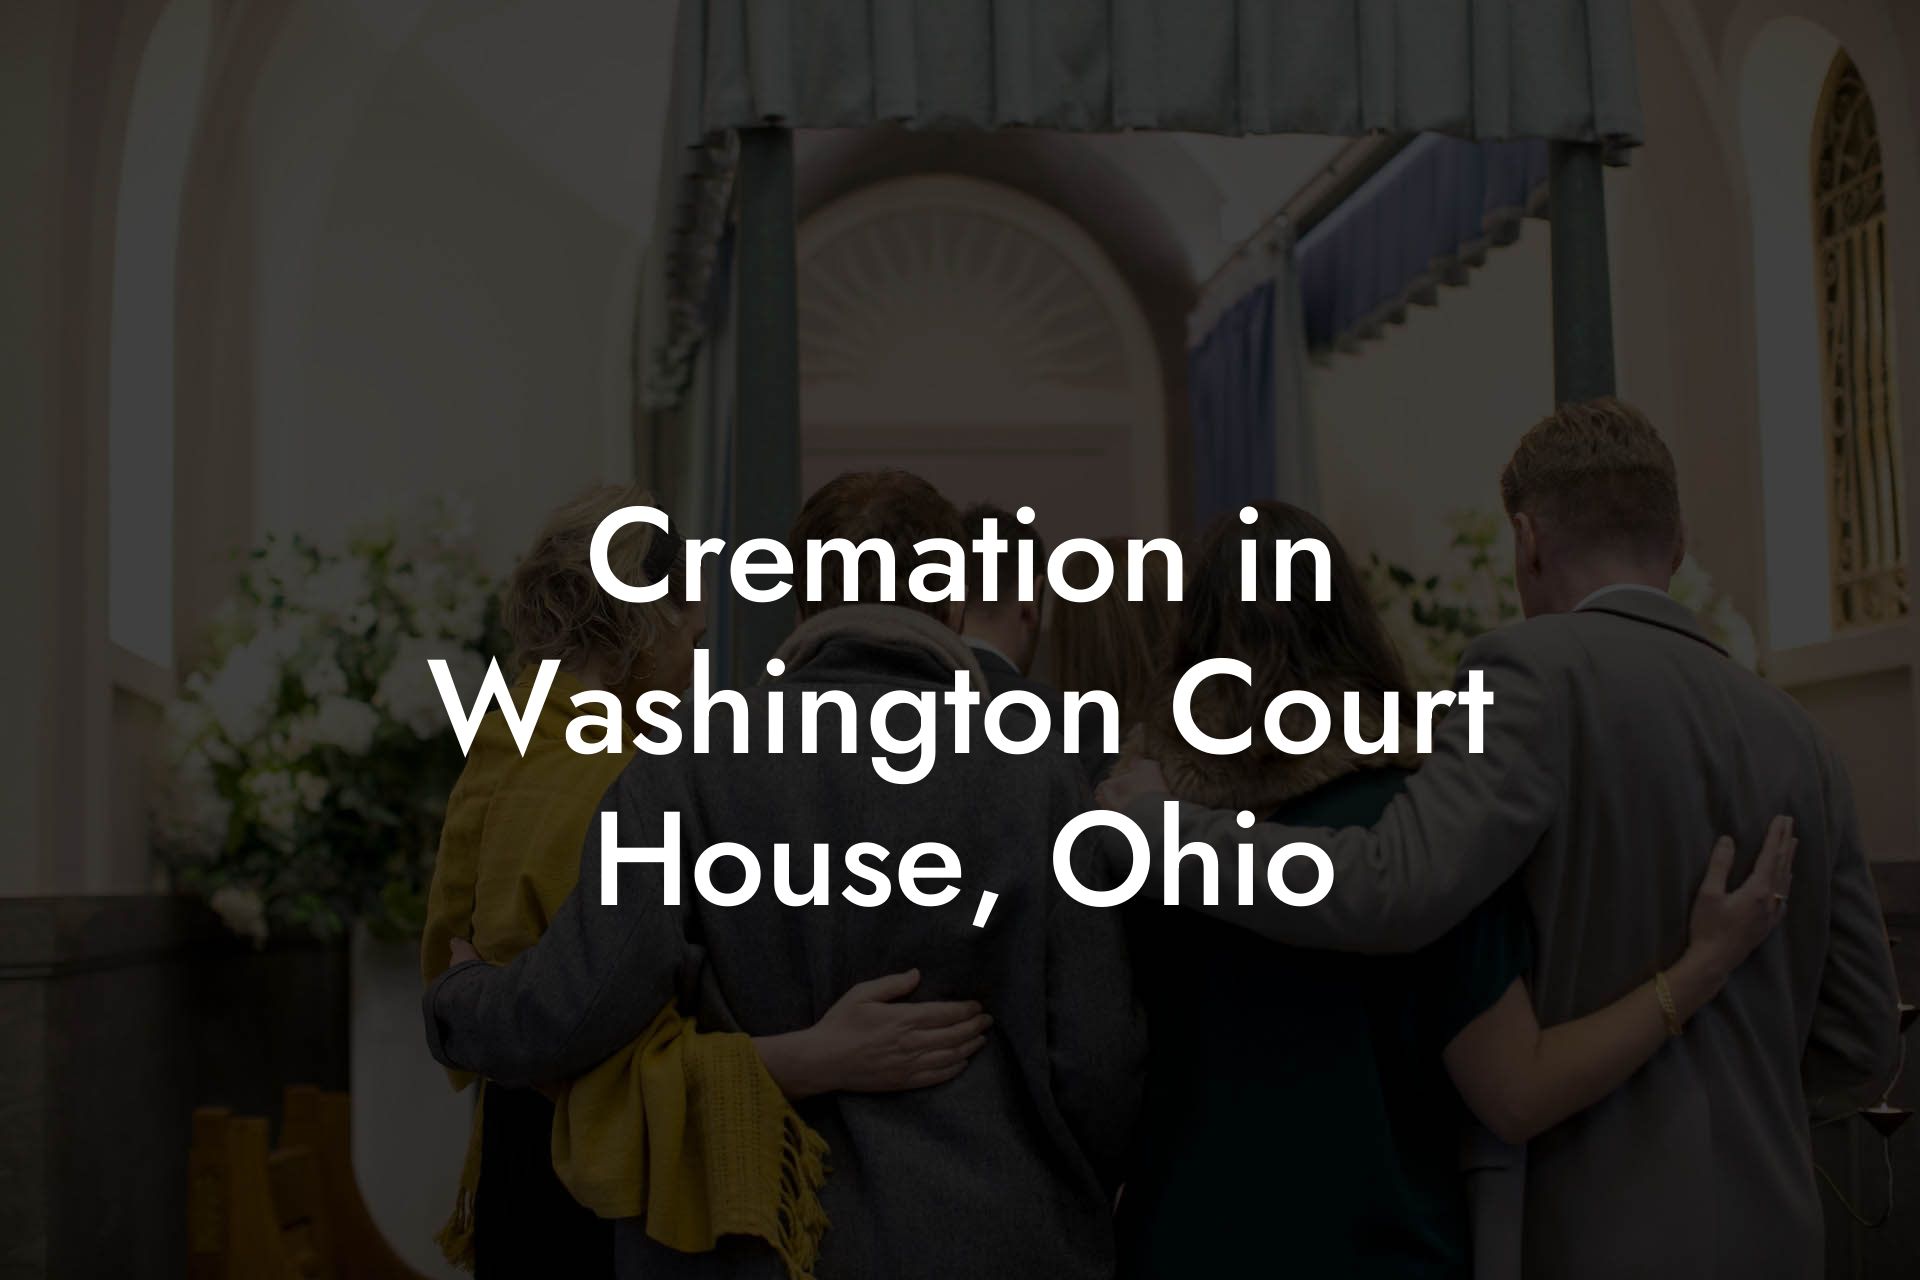 Cremation in Washington Court House, Ohio